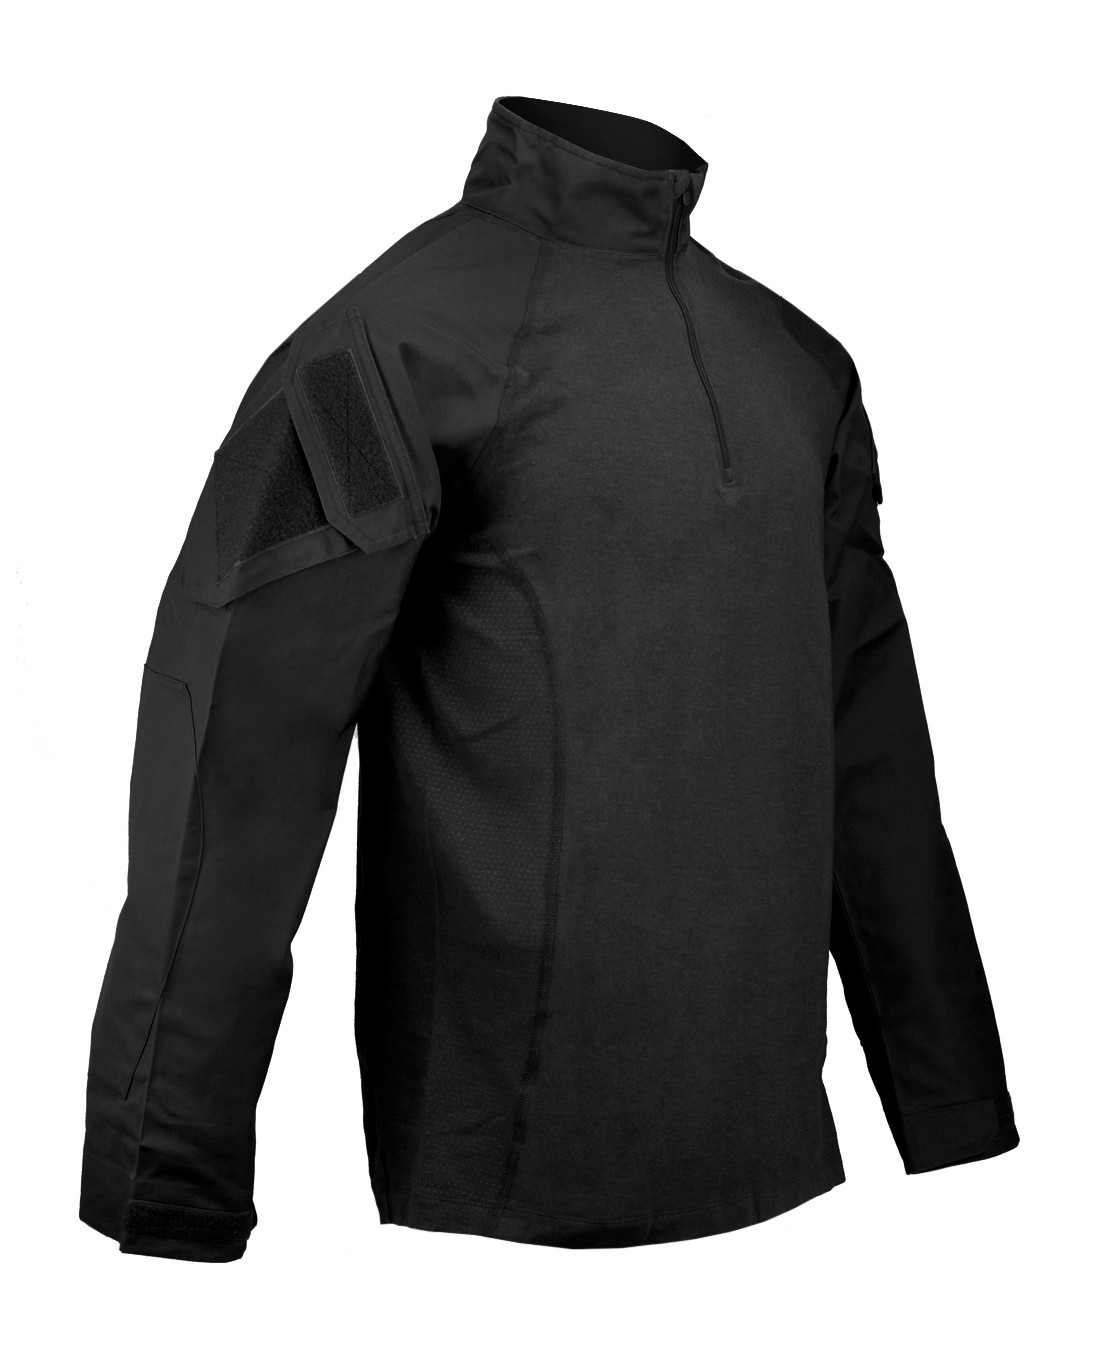 5.11 Tactical Rapid Assault Shirt Black - 72194.019 - TACWRK